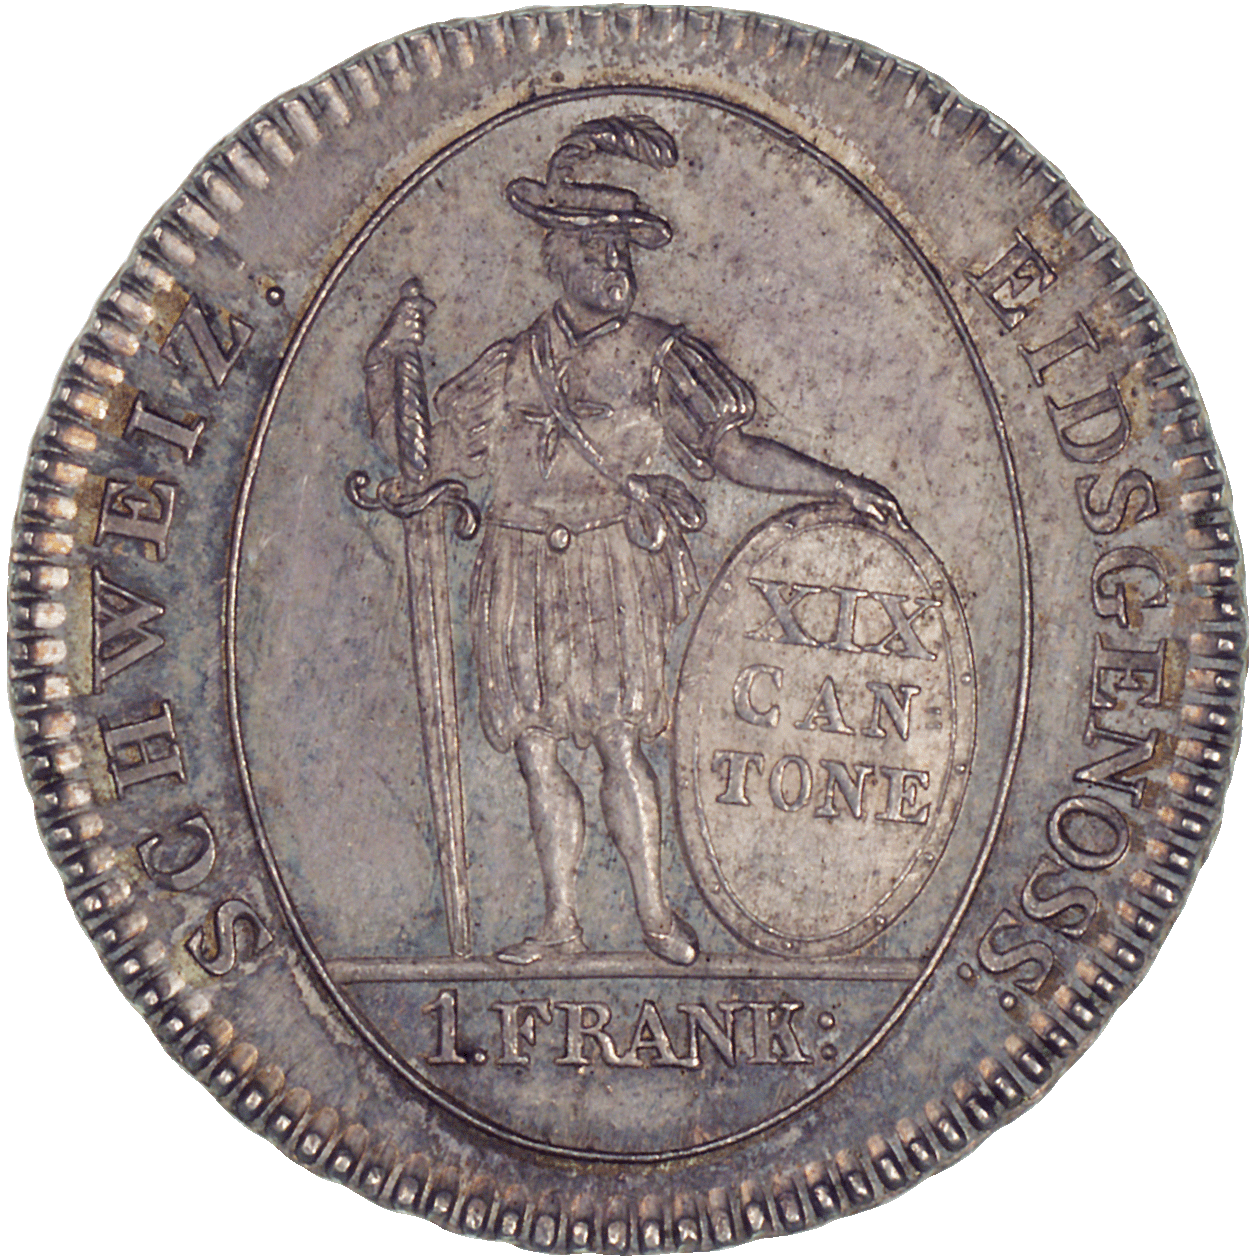 Canton of Berne, Time of Mediation, 1 Franc 1811 (reverse)